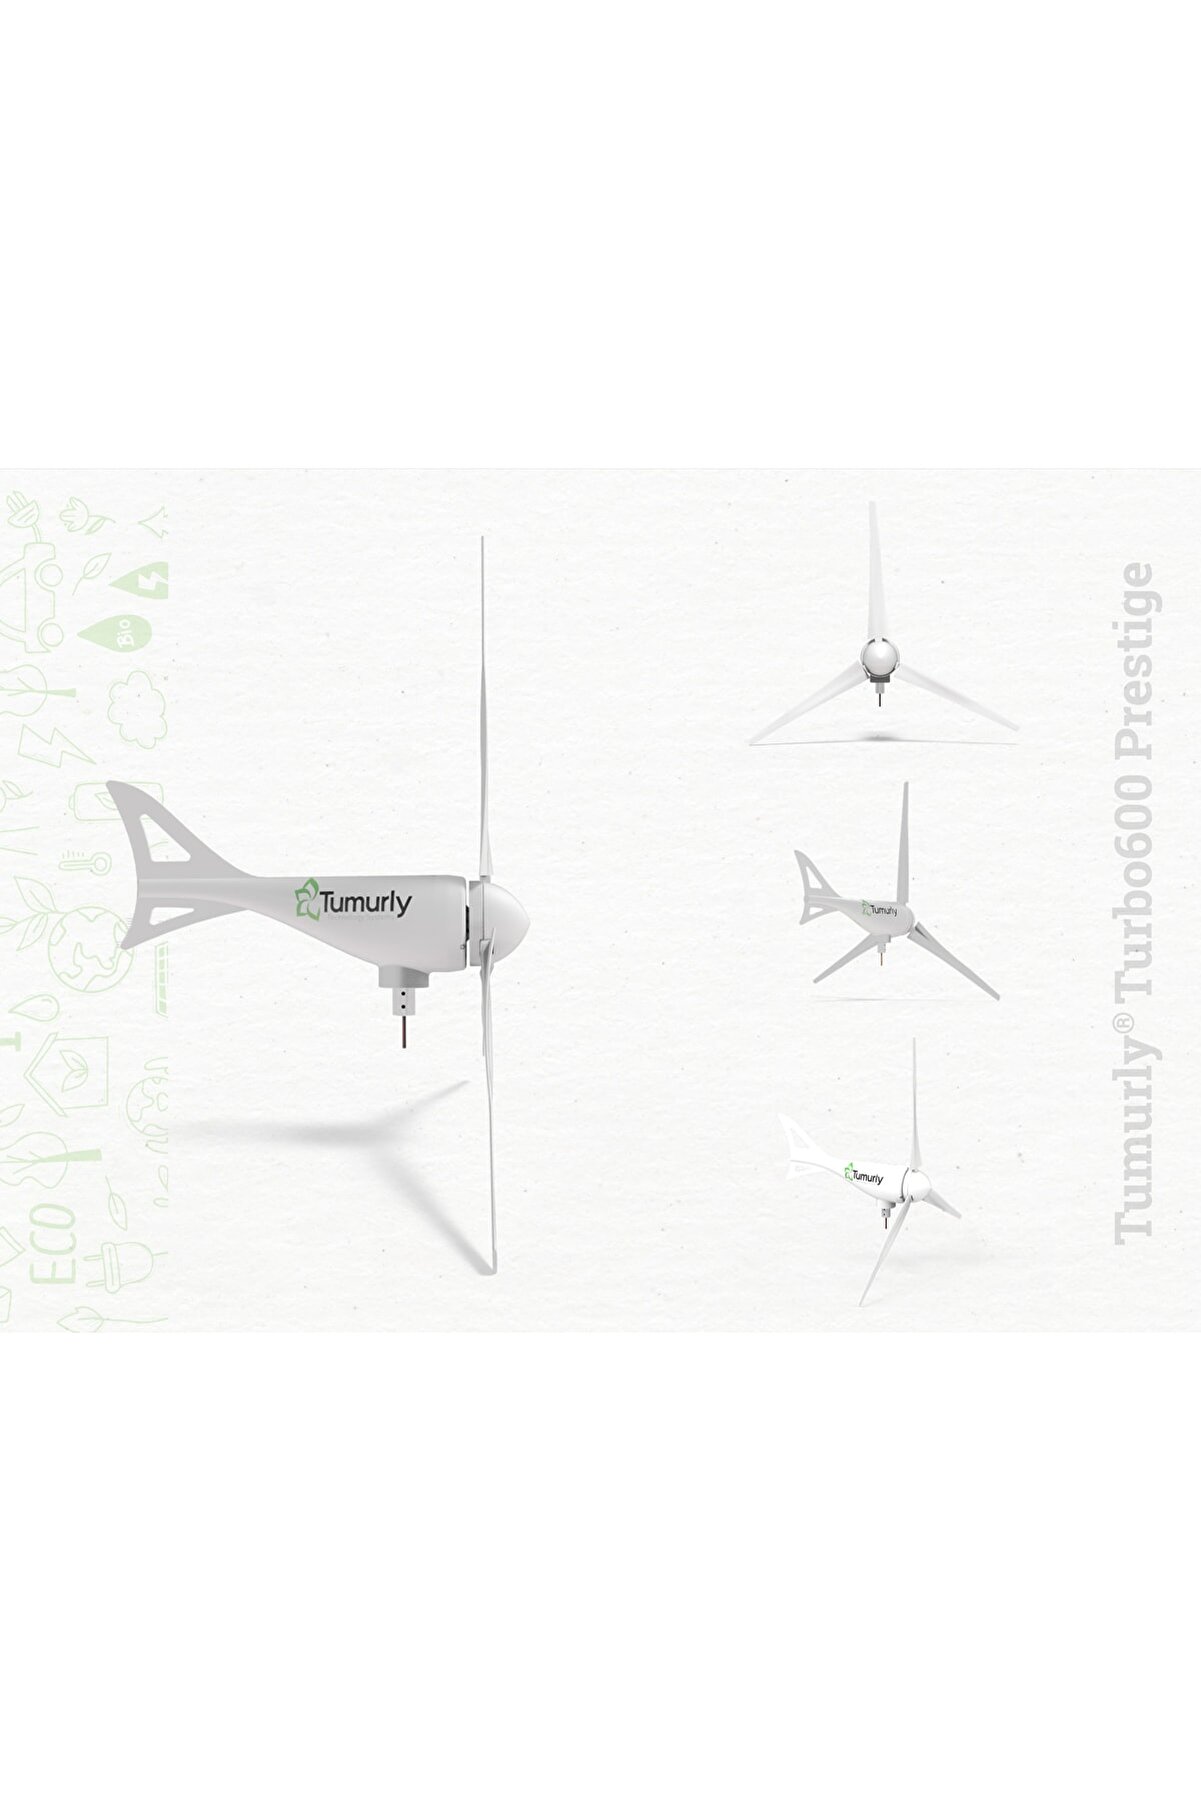 TUMURLY Rüzgar Türbini 600w Akıllı Teknoloji